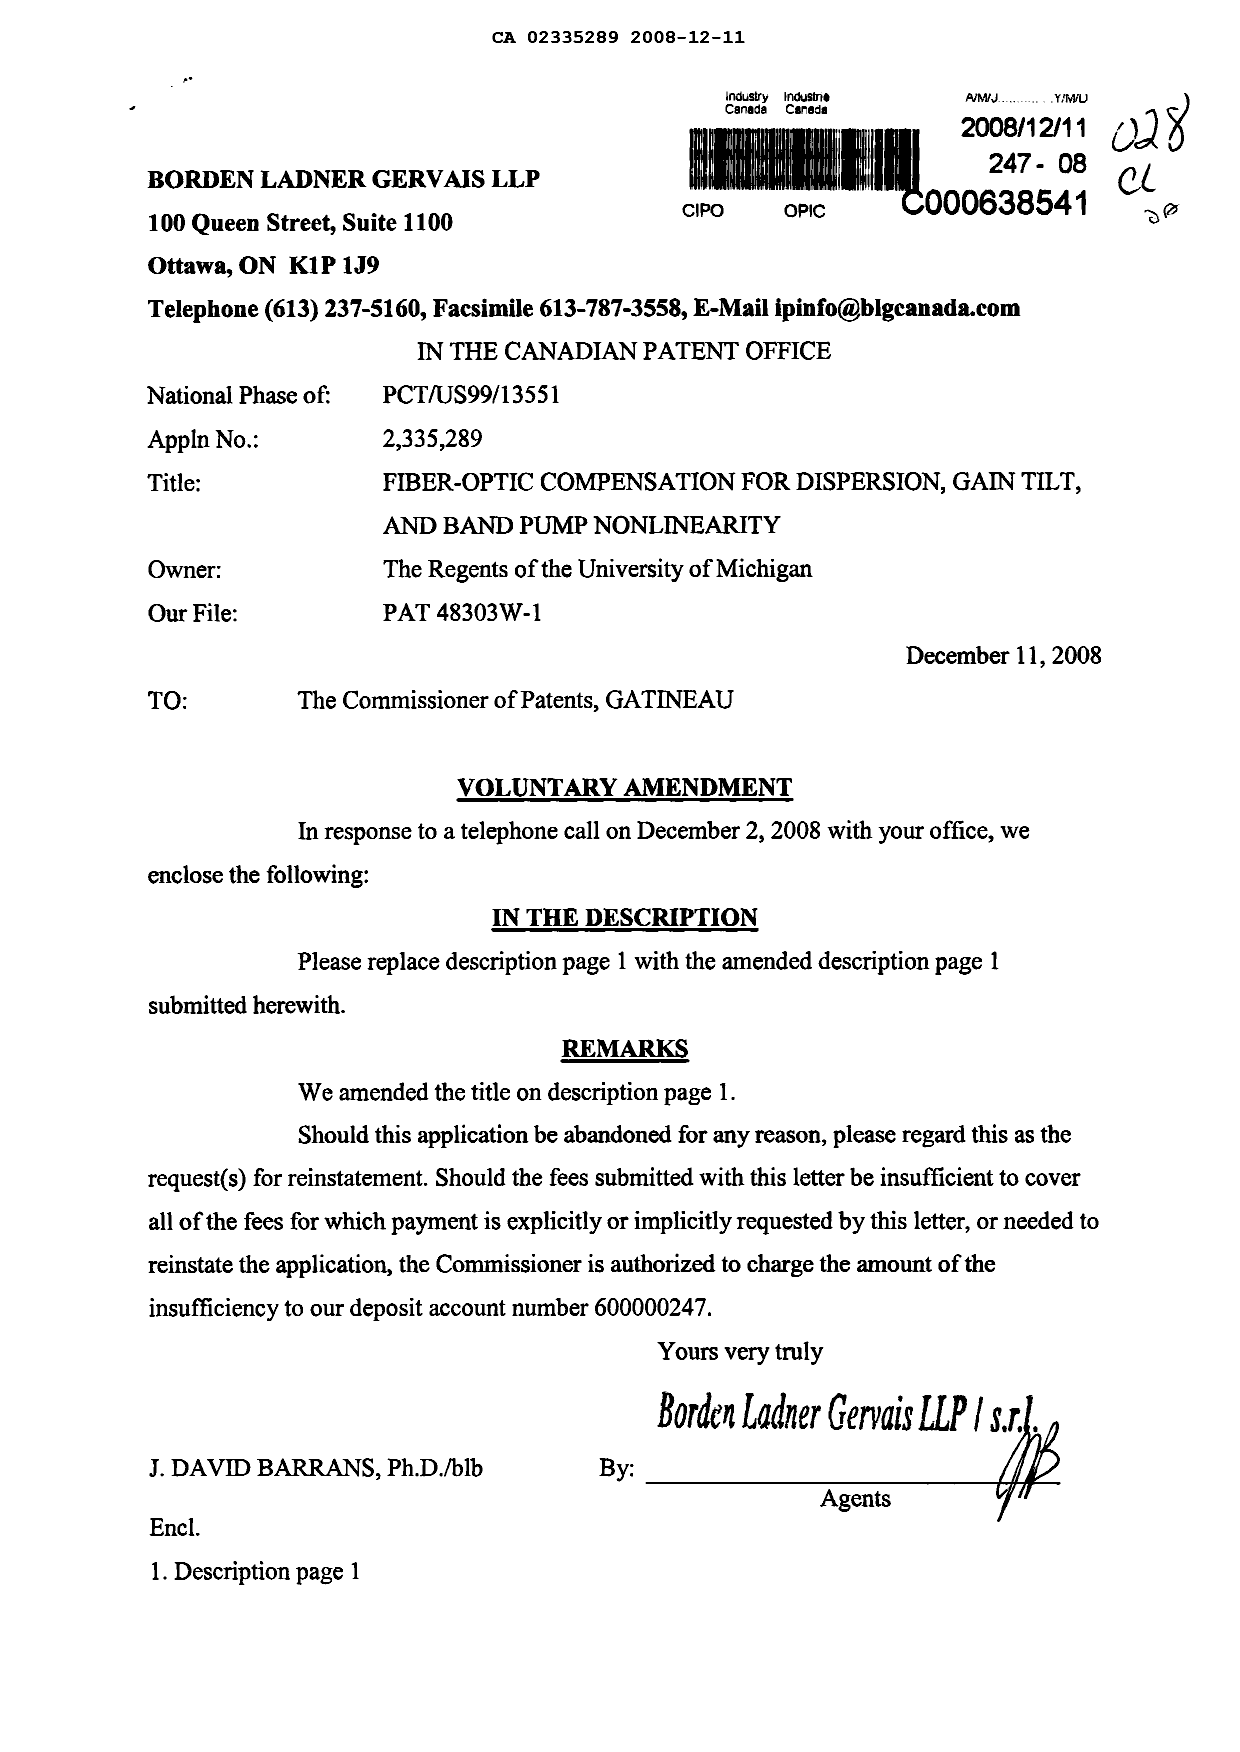 Canadian Patent Document 2335289. Correspondence 20071211. Image 1 of 2